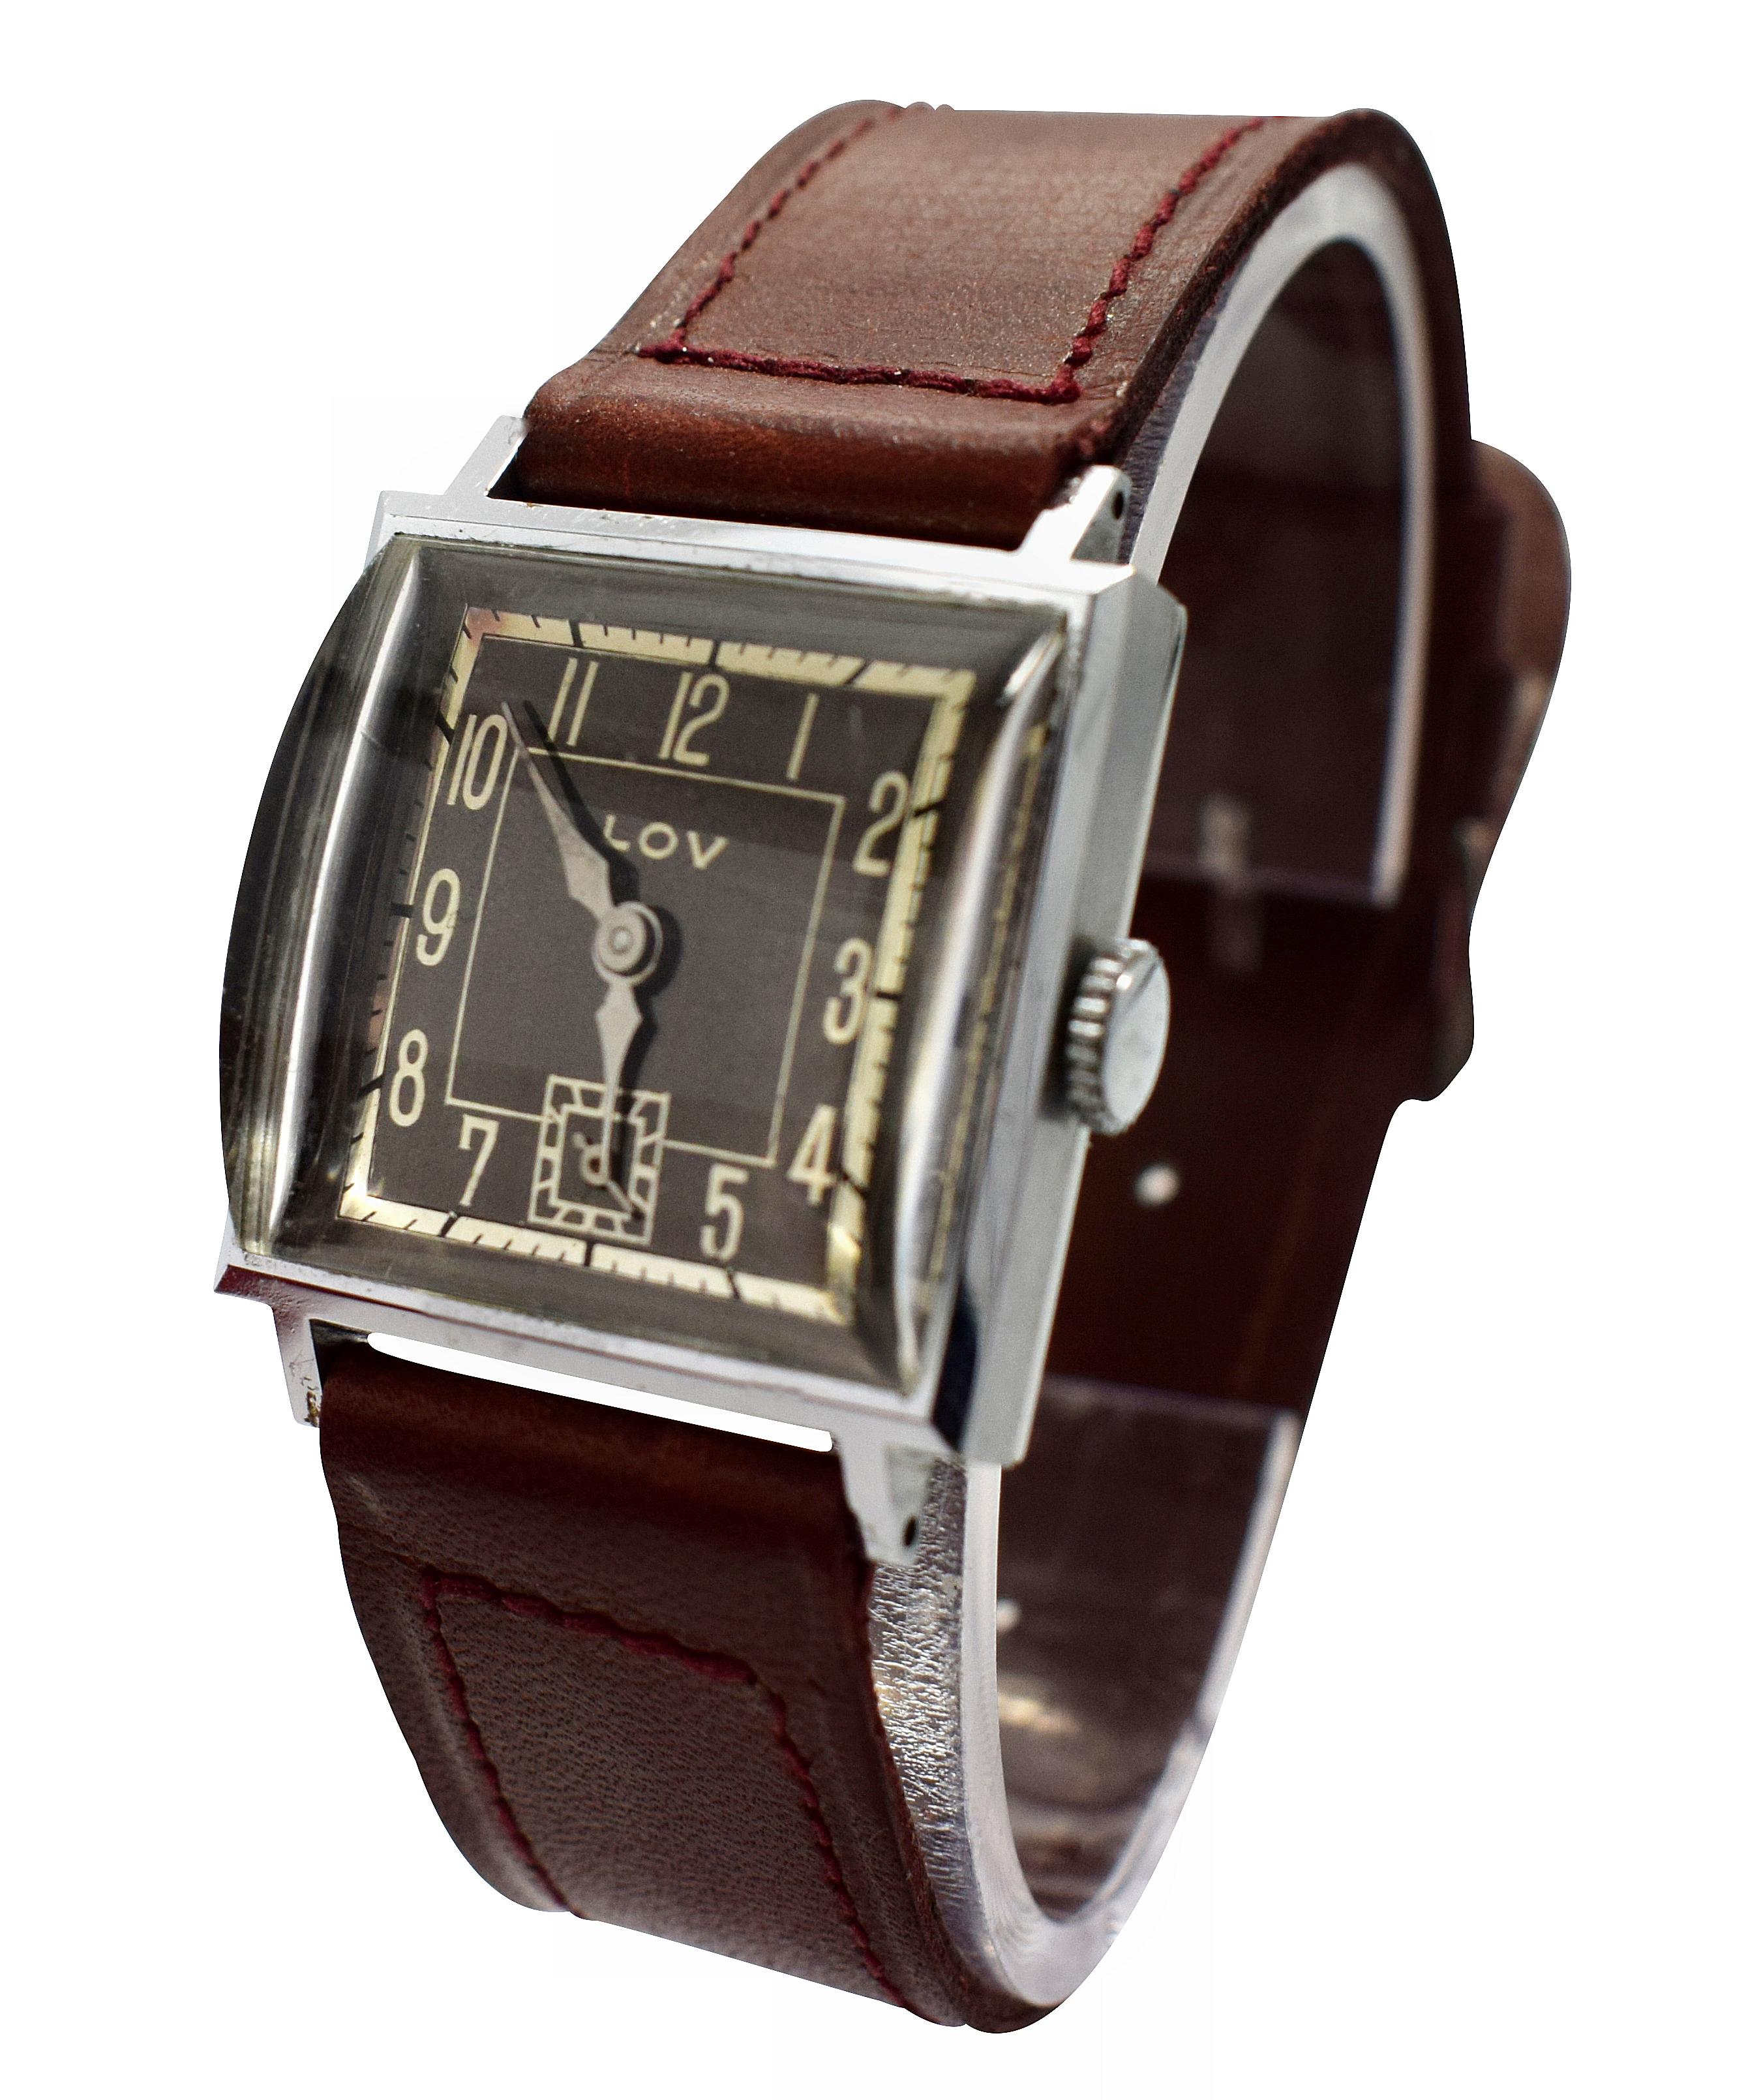 Original Art Deco Gents Wrist Watch by Lov or Never Worn, circa 1930 2